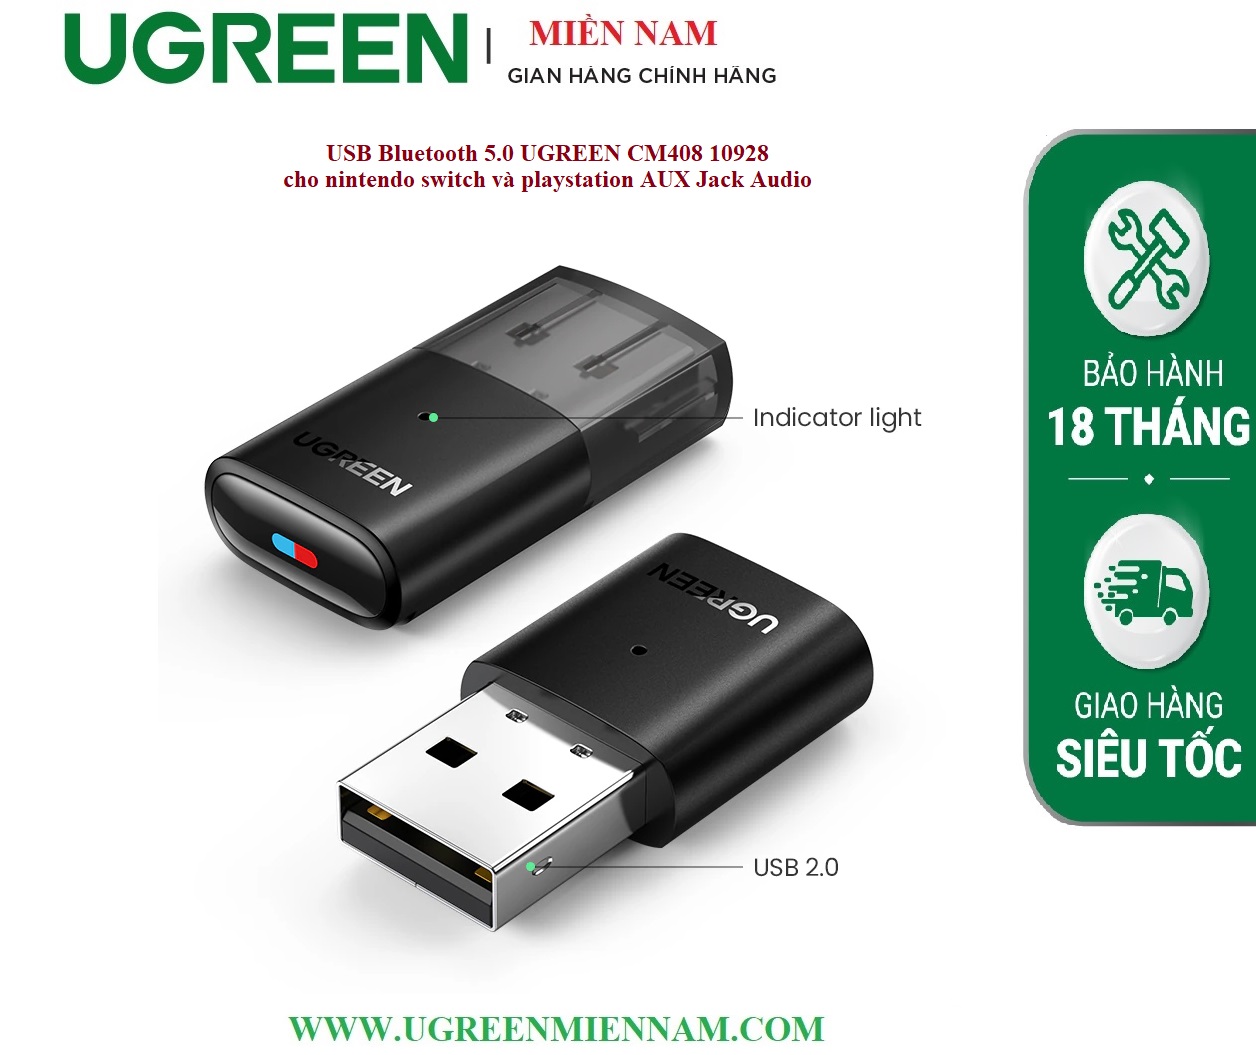 USB Bluetooth 5.0 UGREEN CM408 10928 cho nintendo switch và playstation AUX Jack Audio – Ugreen Miền Nam